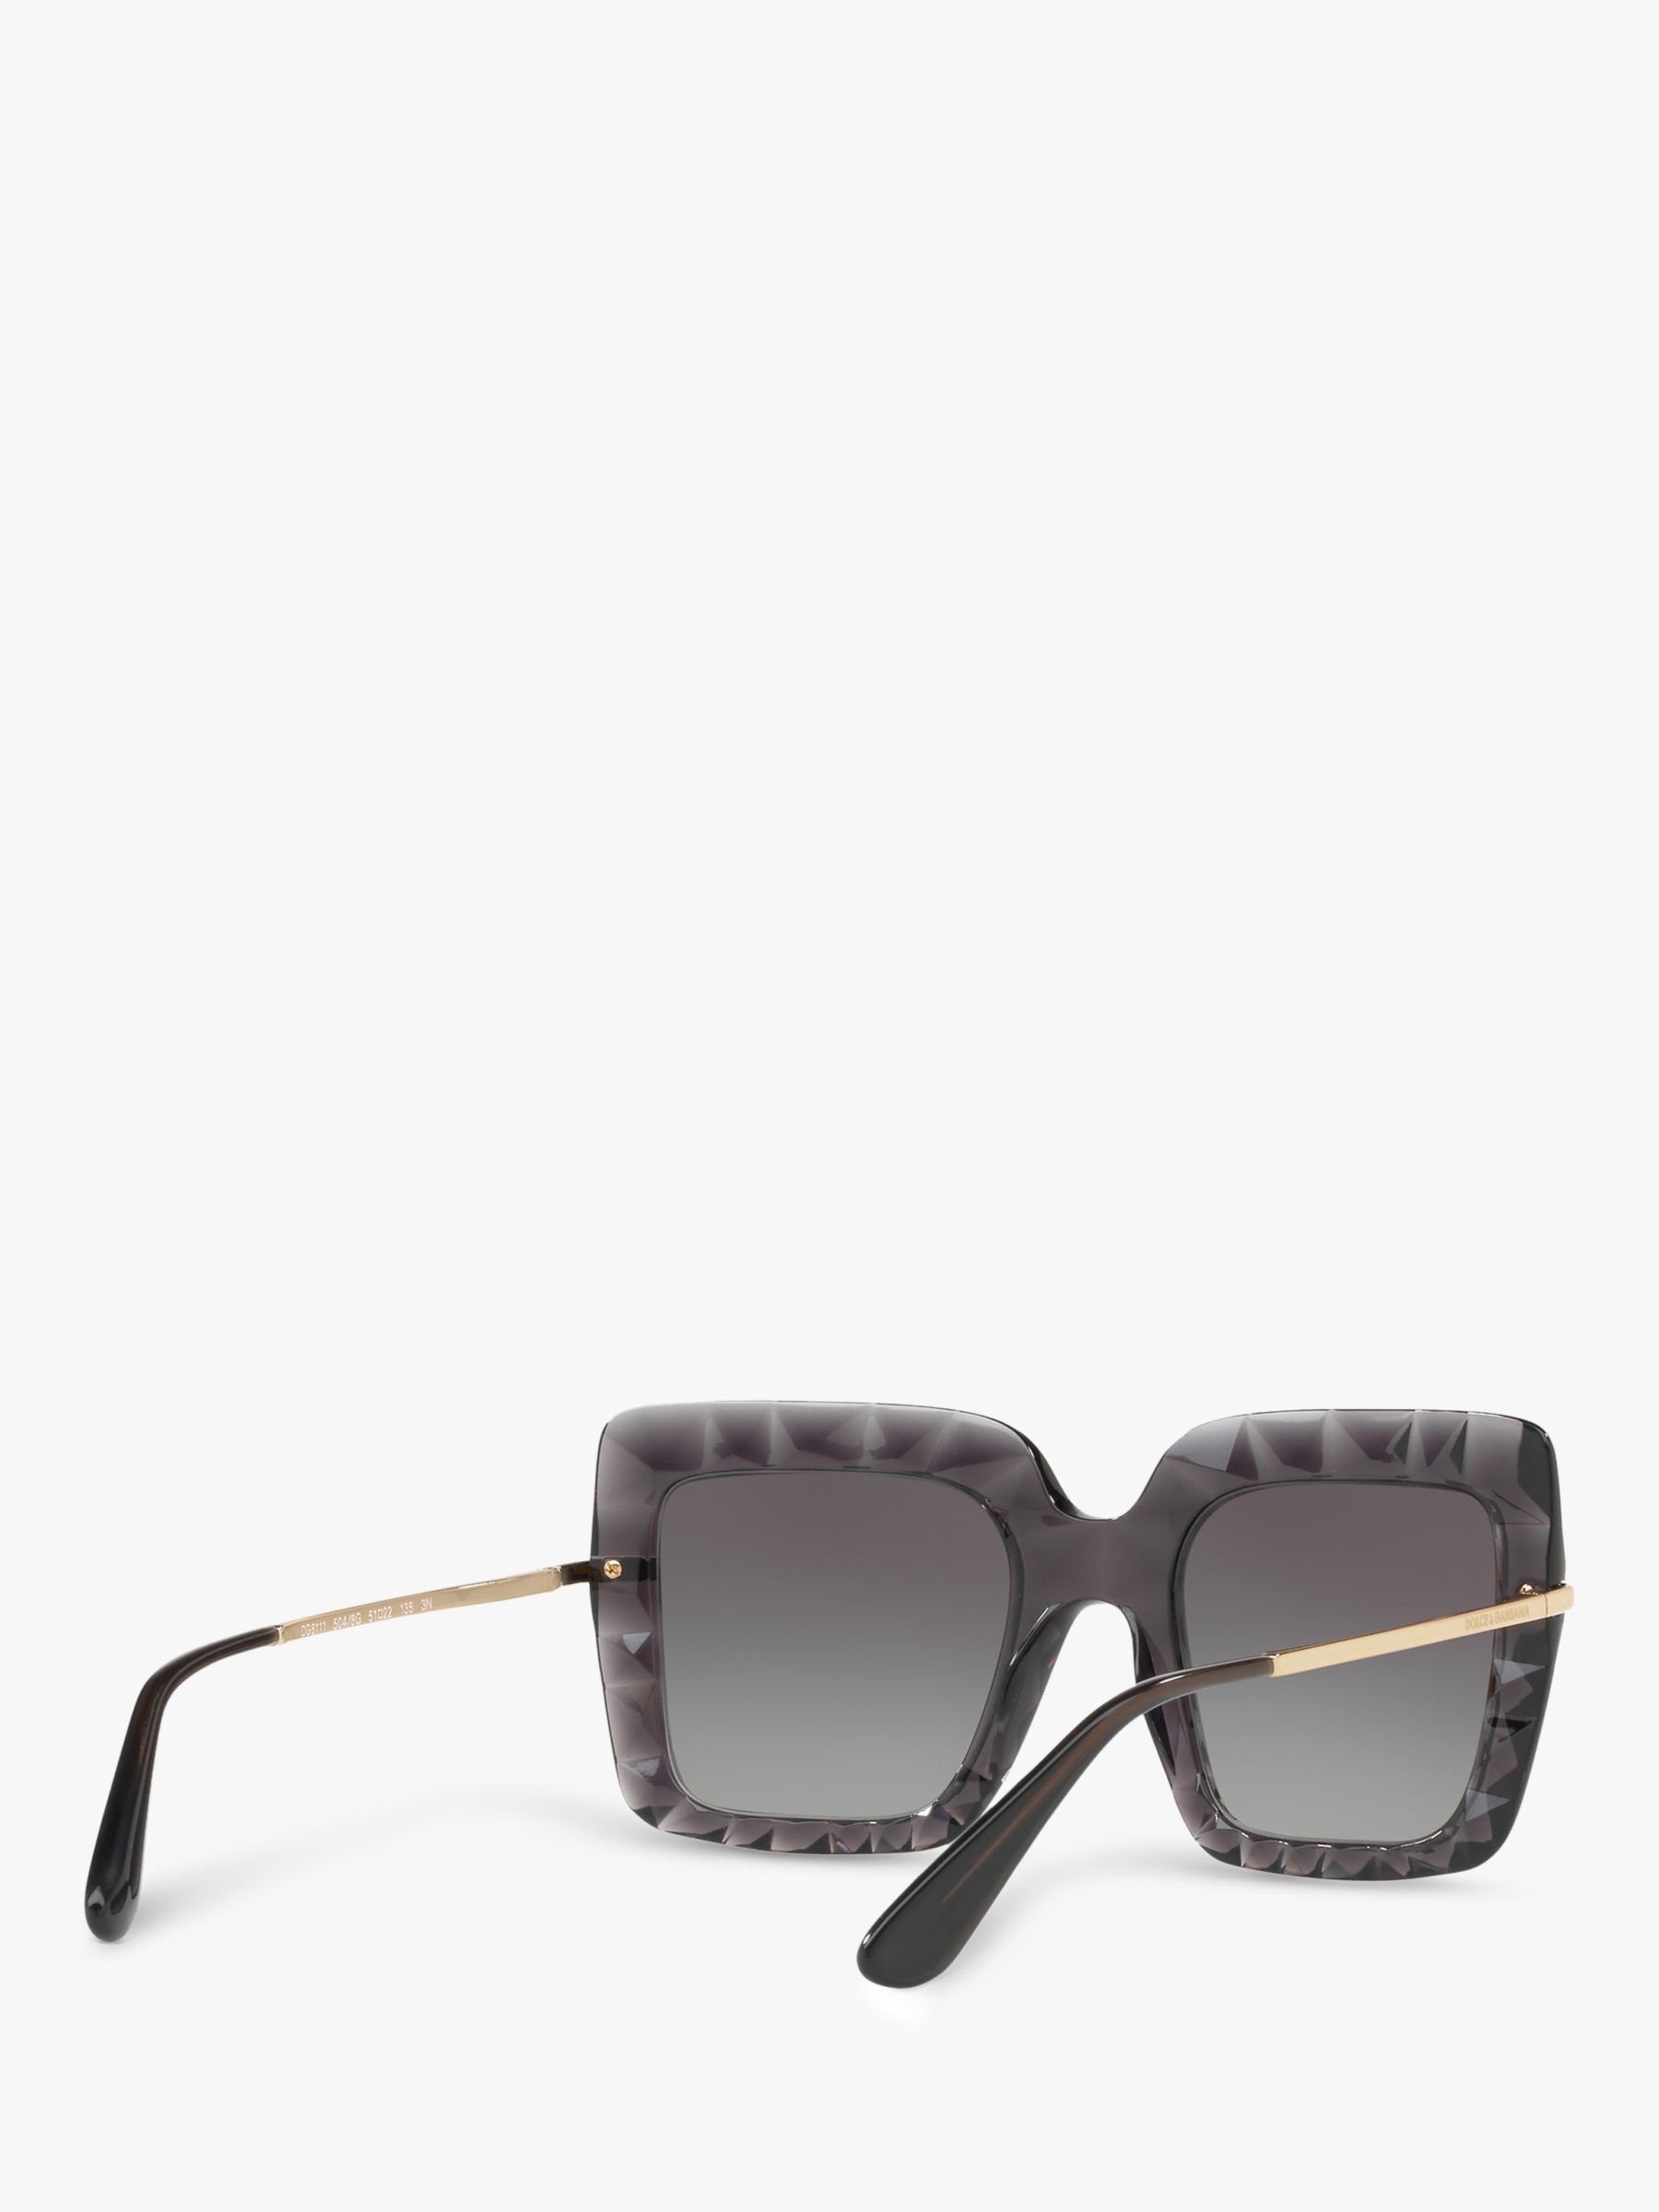 Dolce & Gabbana DG6111 Square Sunglasses, Transparent Grey/Grey Gradient